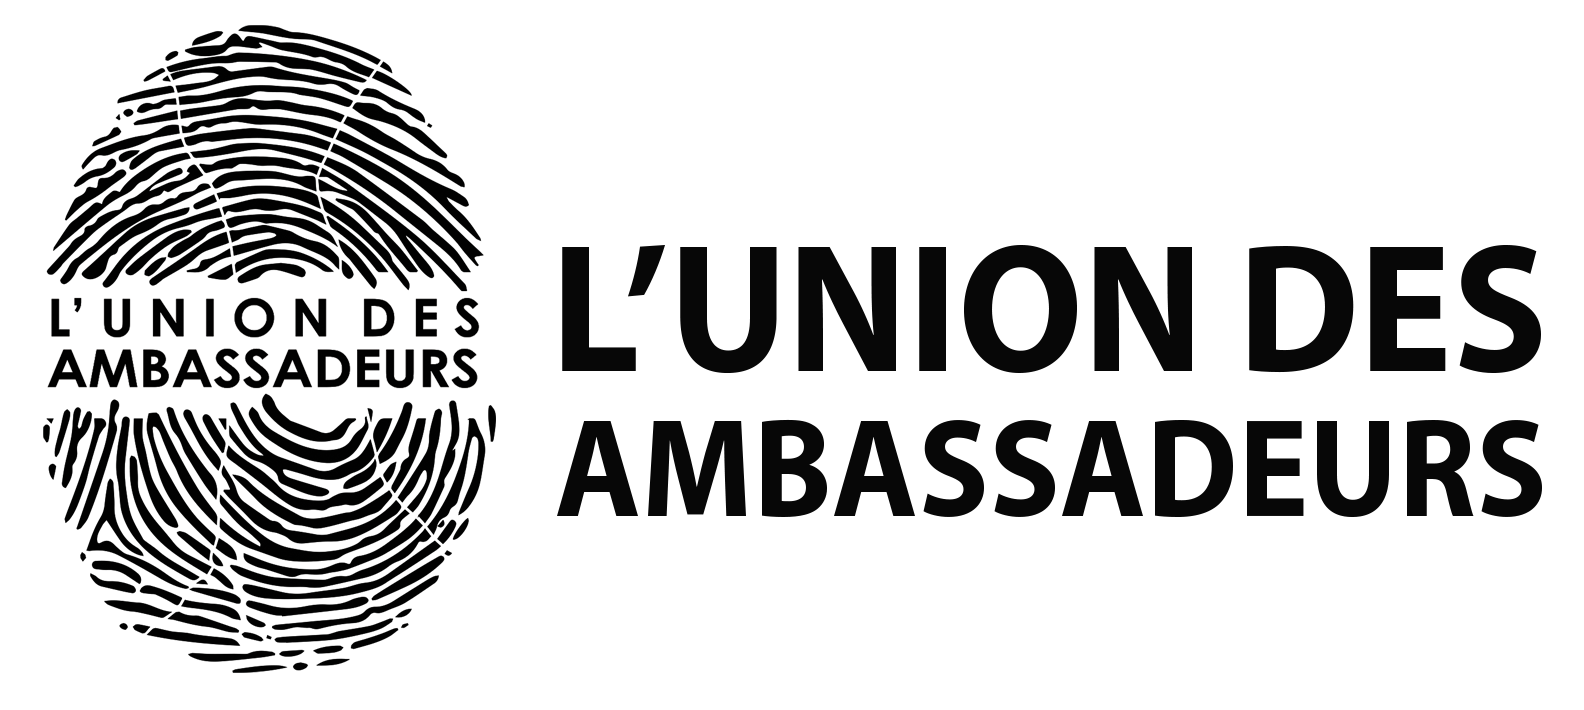 Union des ambassadeurs